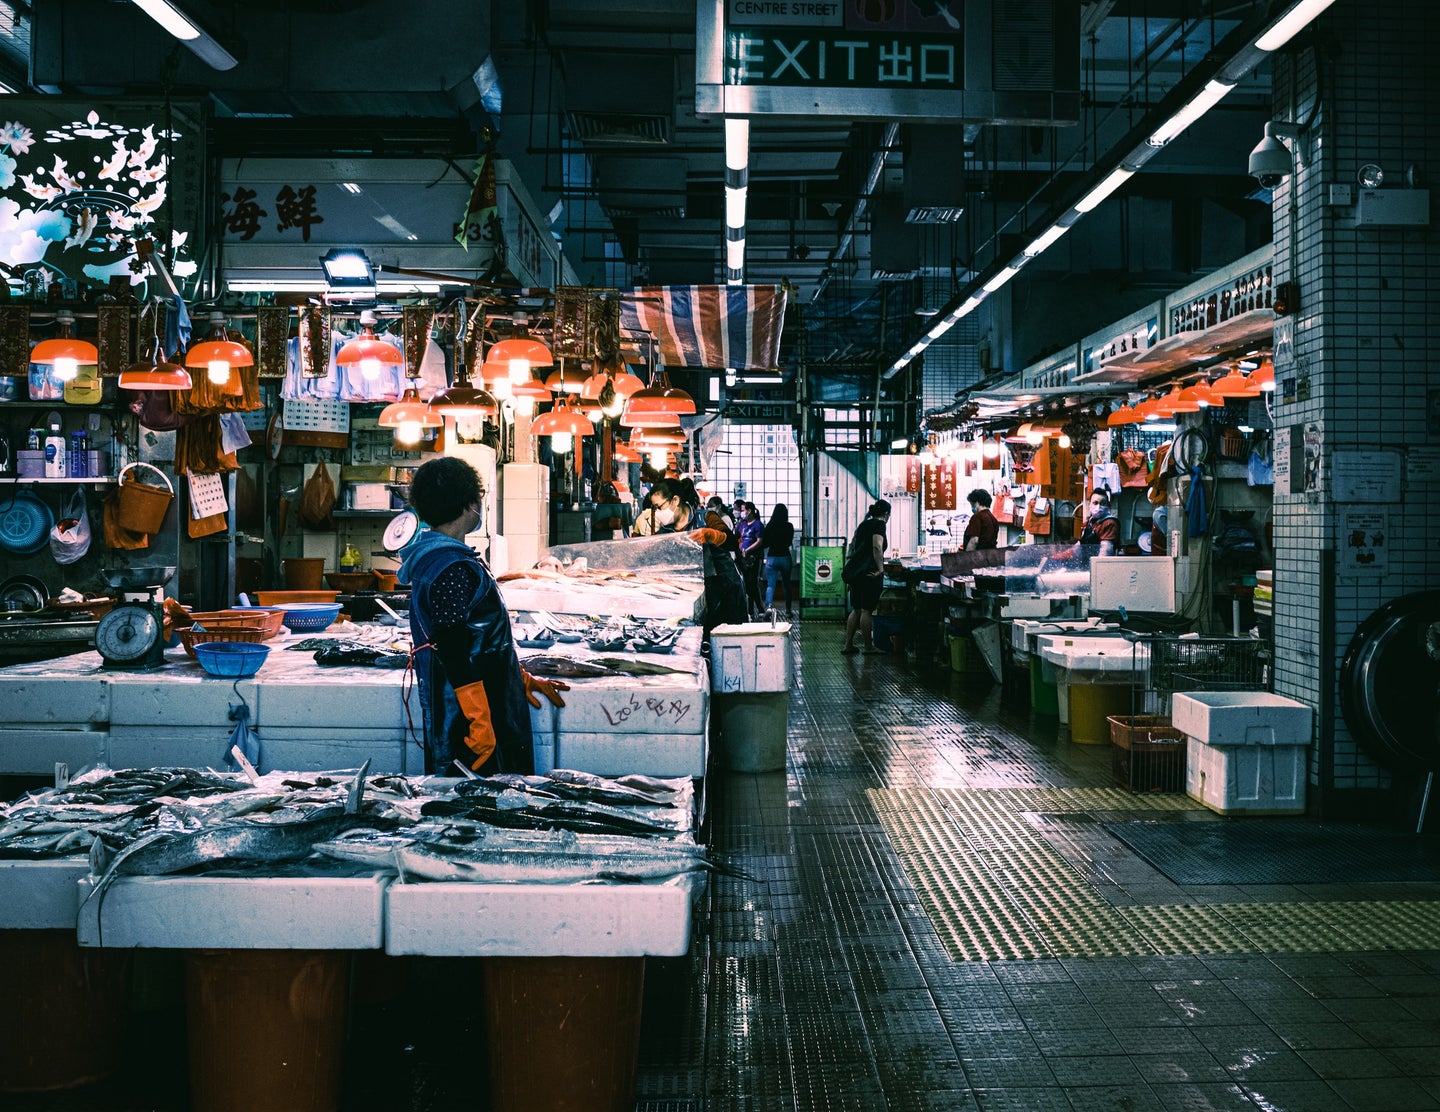 wet street market selling fish